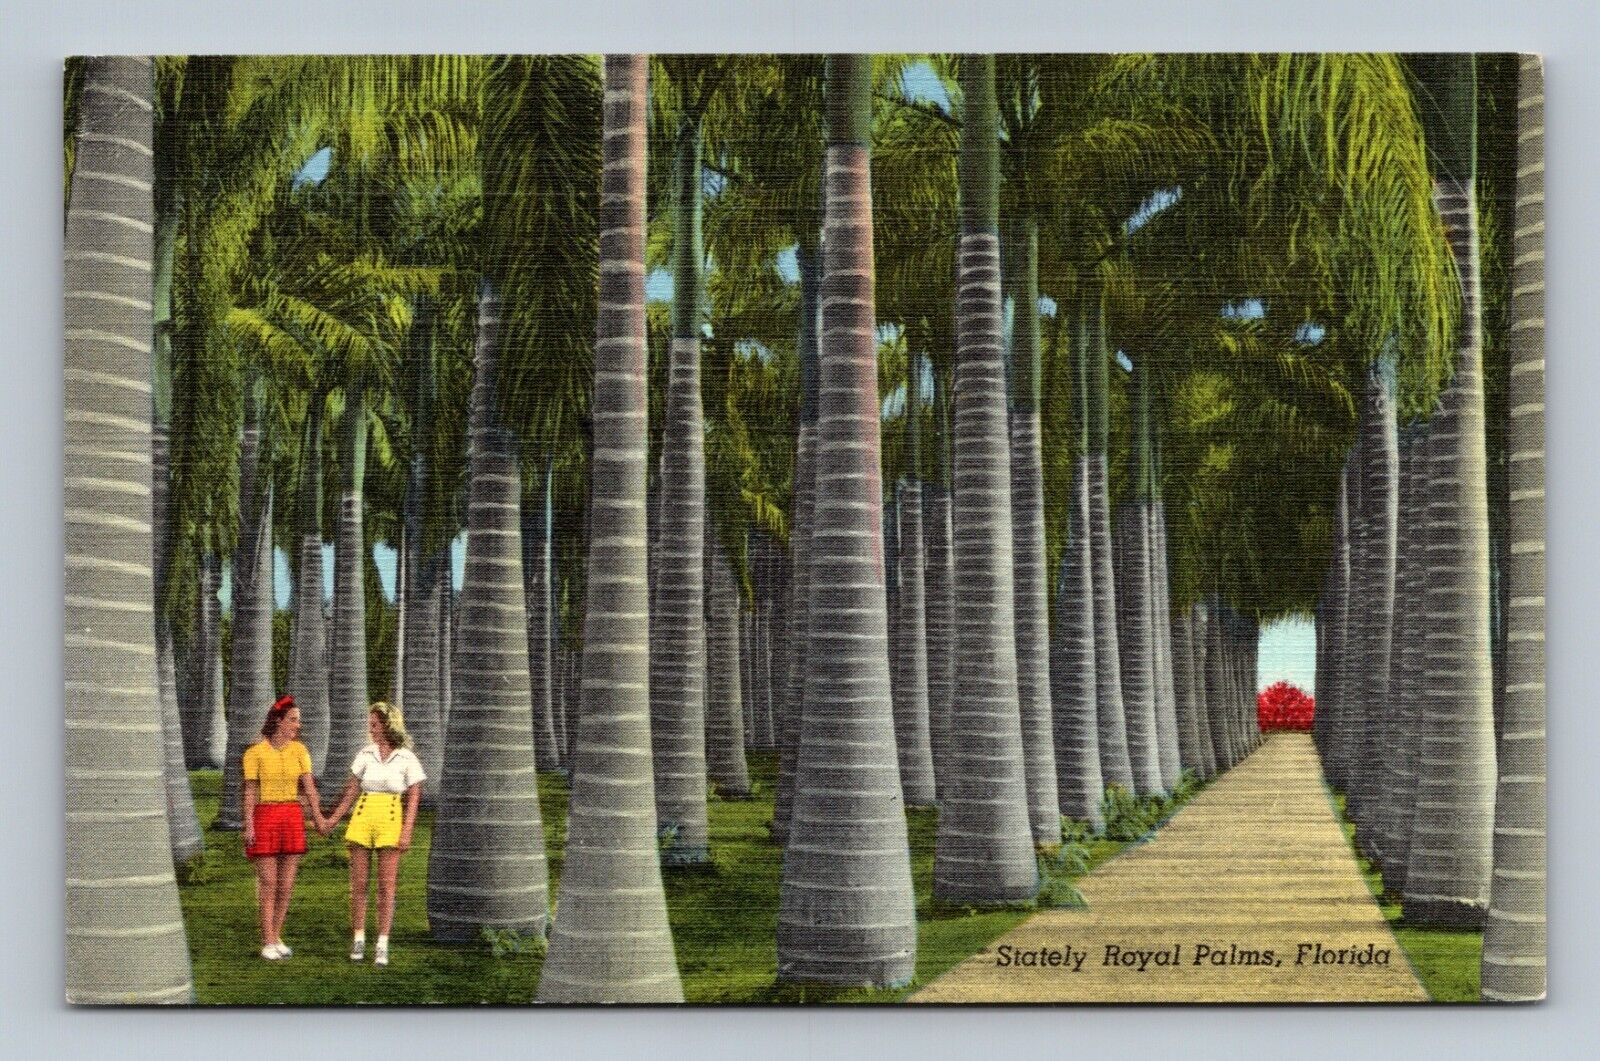 Stately Royal Palms, Florida, FL, Two Girls, 1942 Linen Vintage Postcard